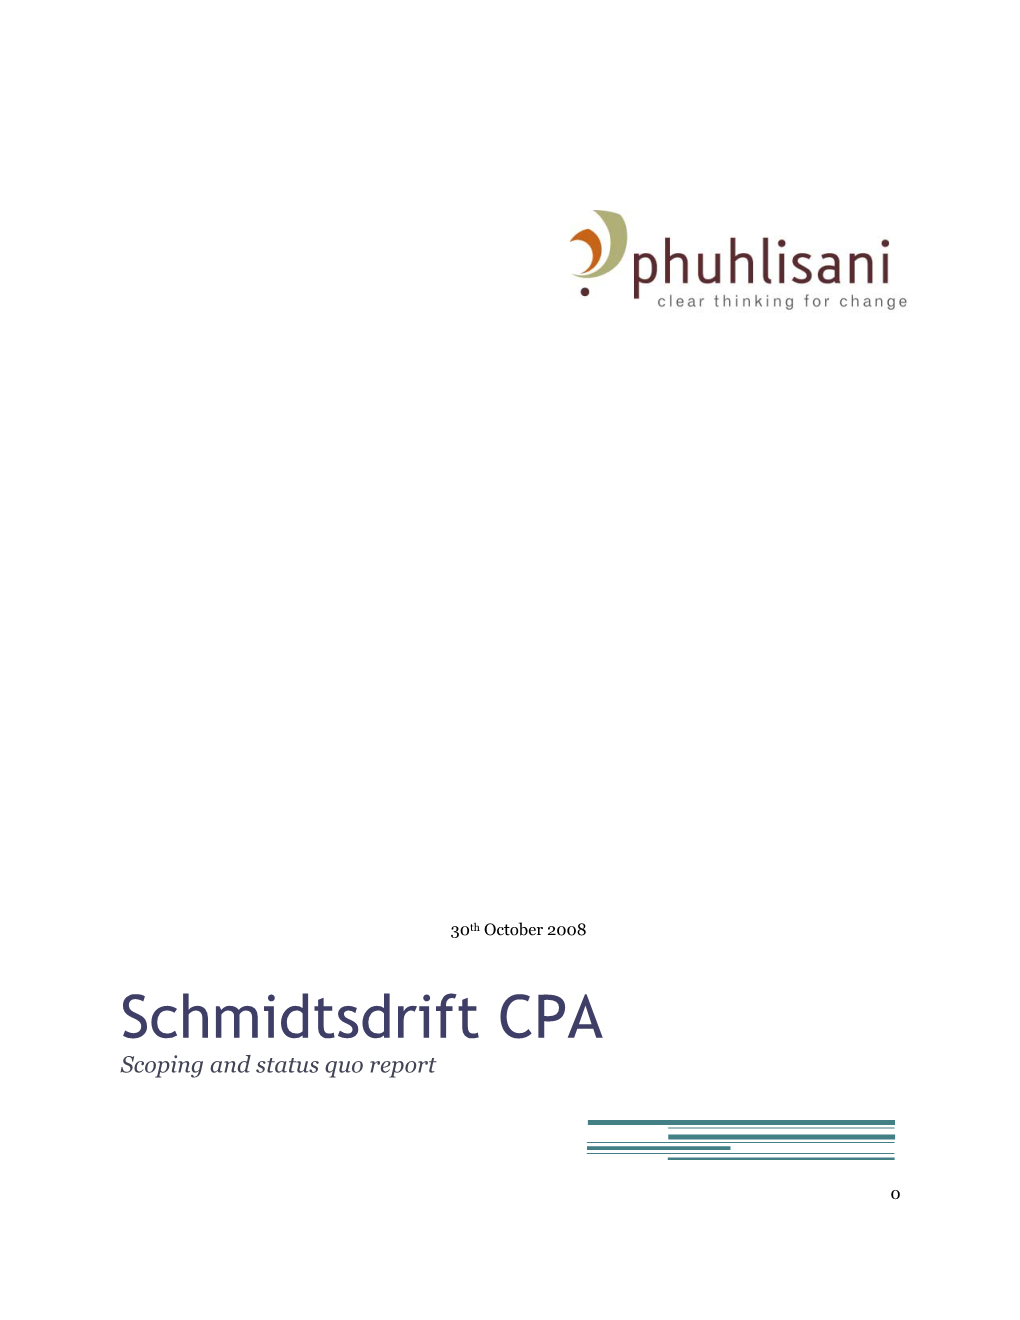 Schmidtsdrift CPA Scoping and Status Quo Report